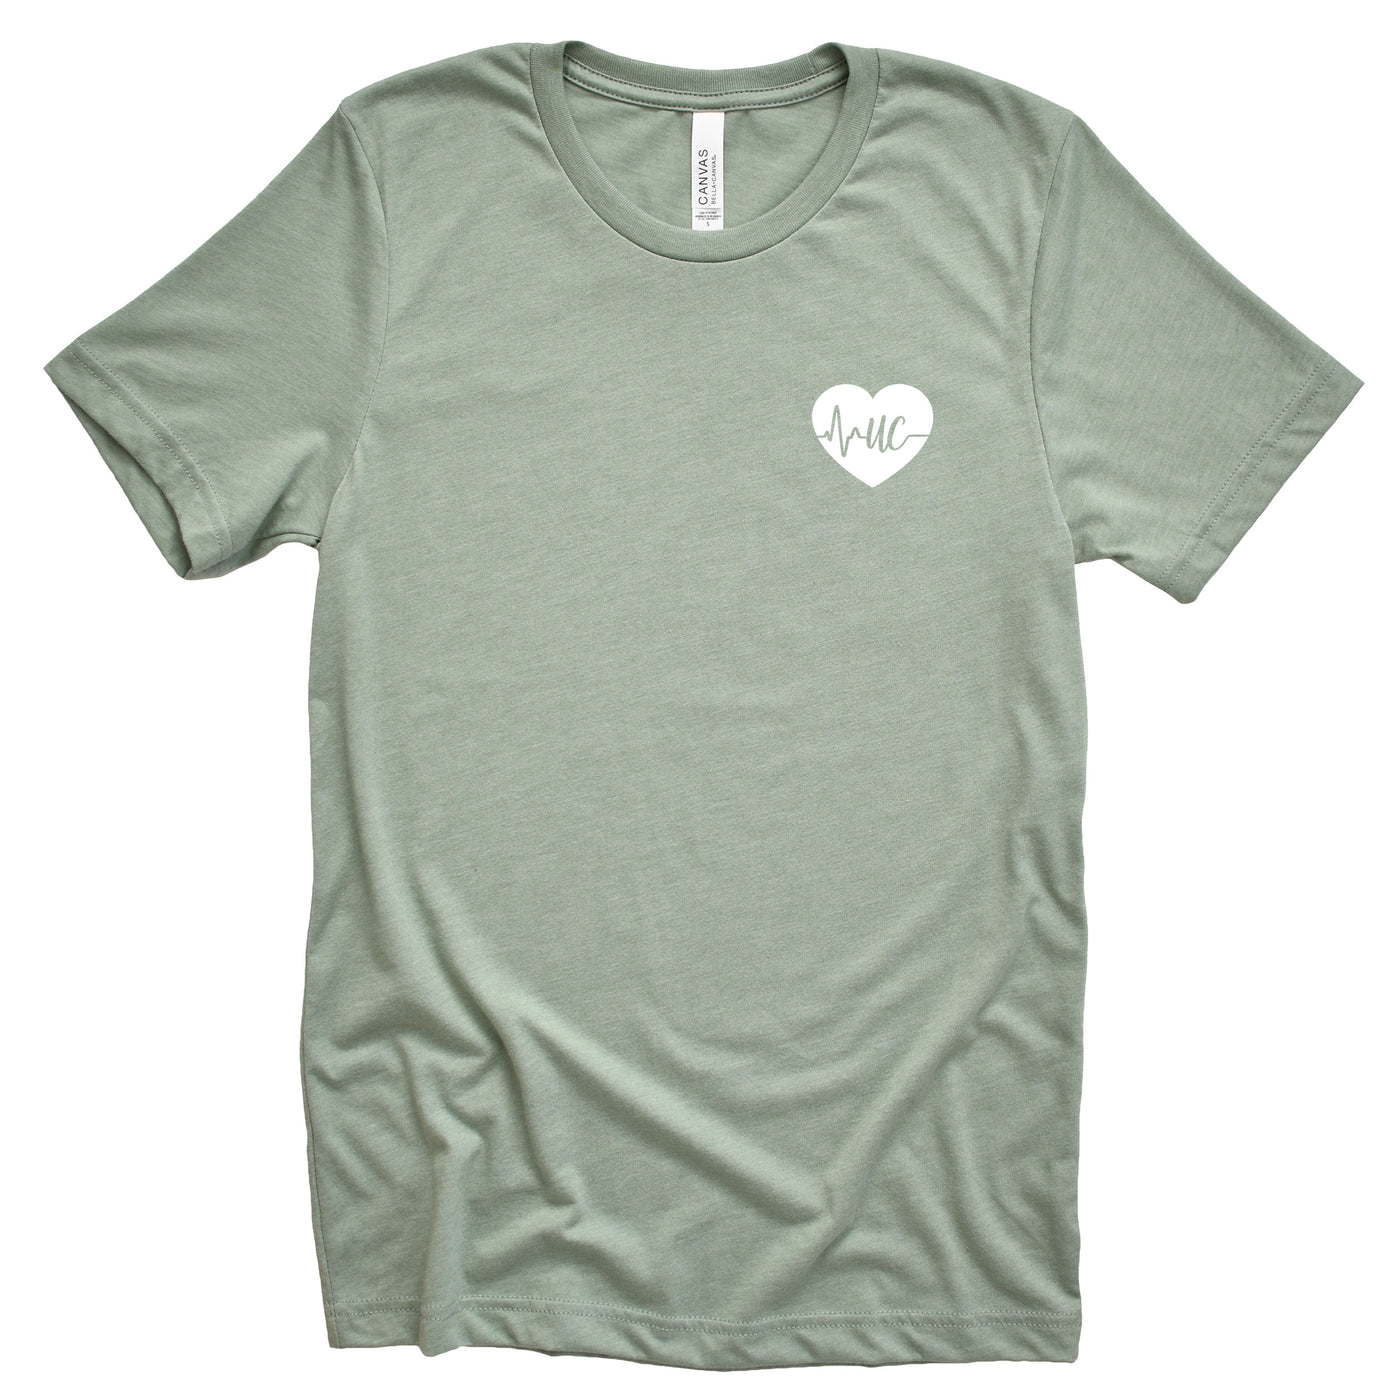 Unit Clerk ECG Heart - Shirt